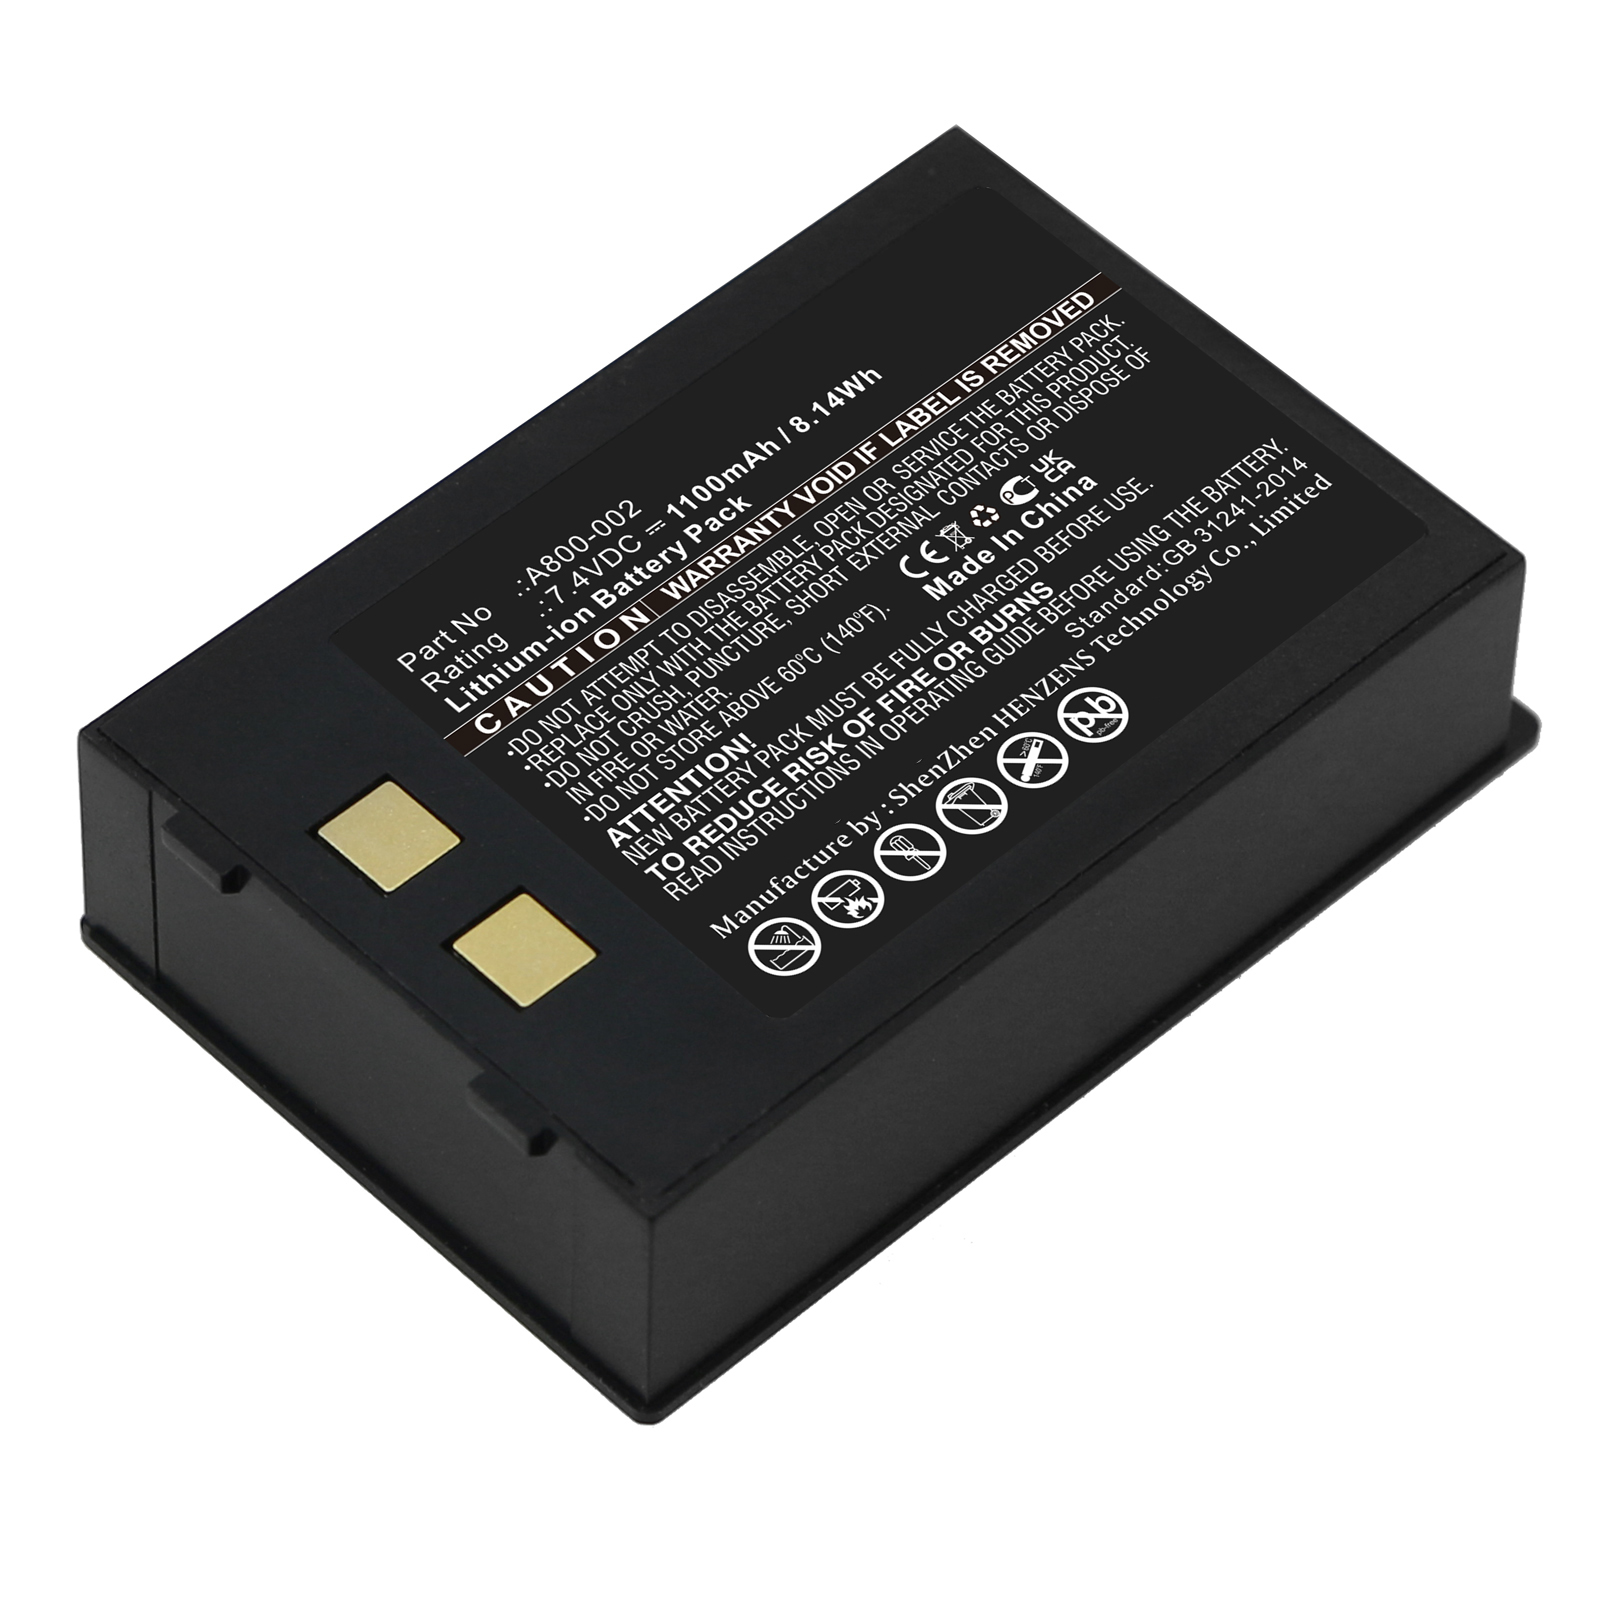 Synergy Digital Printer Battery, Compatible with Star A800-002 Printer Battery (Li-ion, 7.4V, 1100mAh)